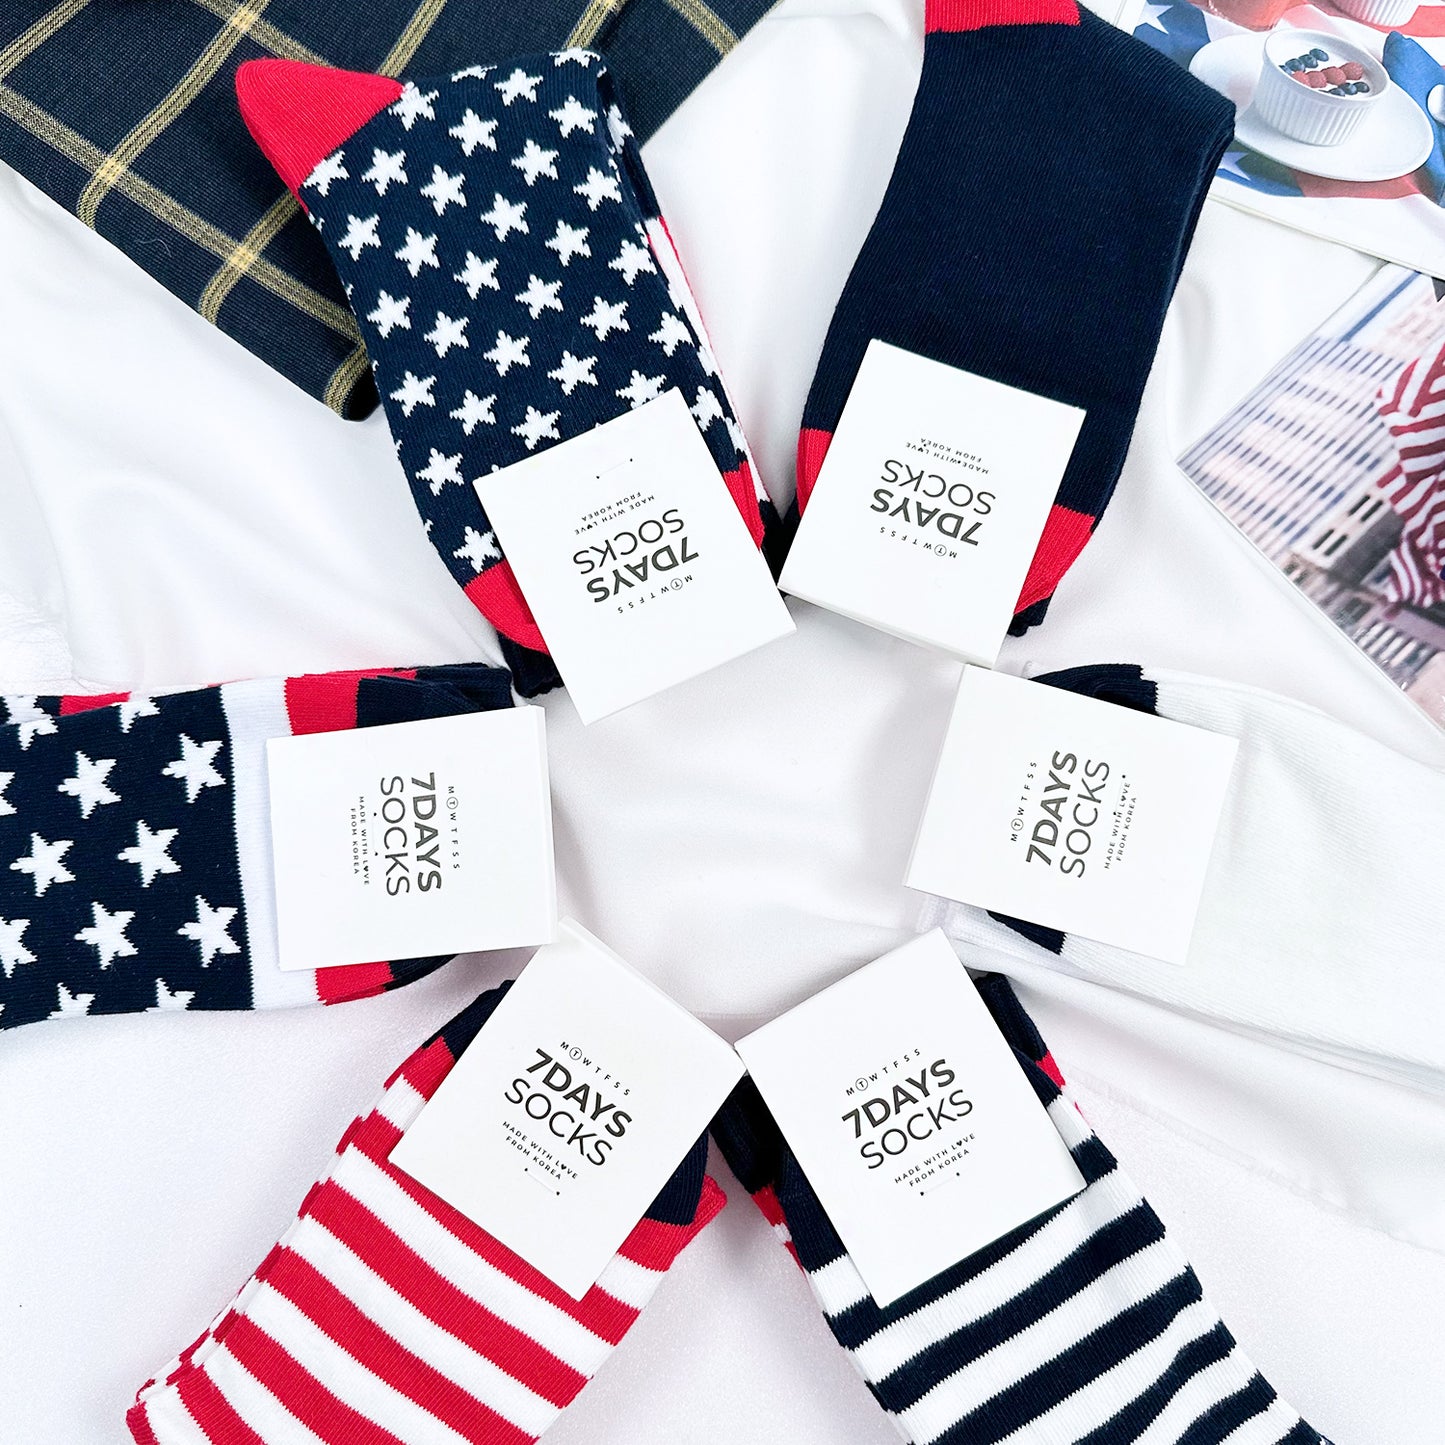 Women's Crew American Flag Socks